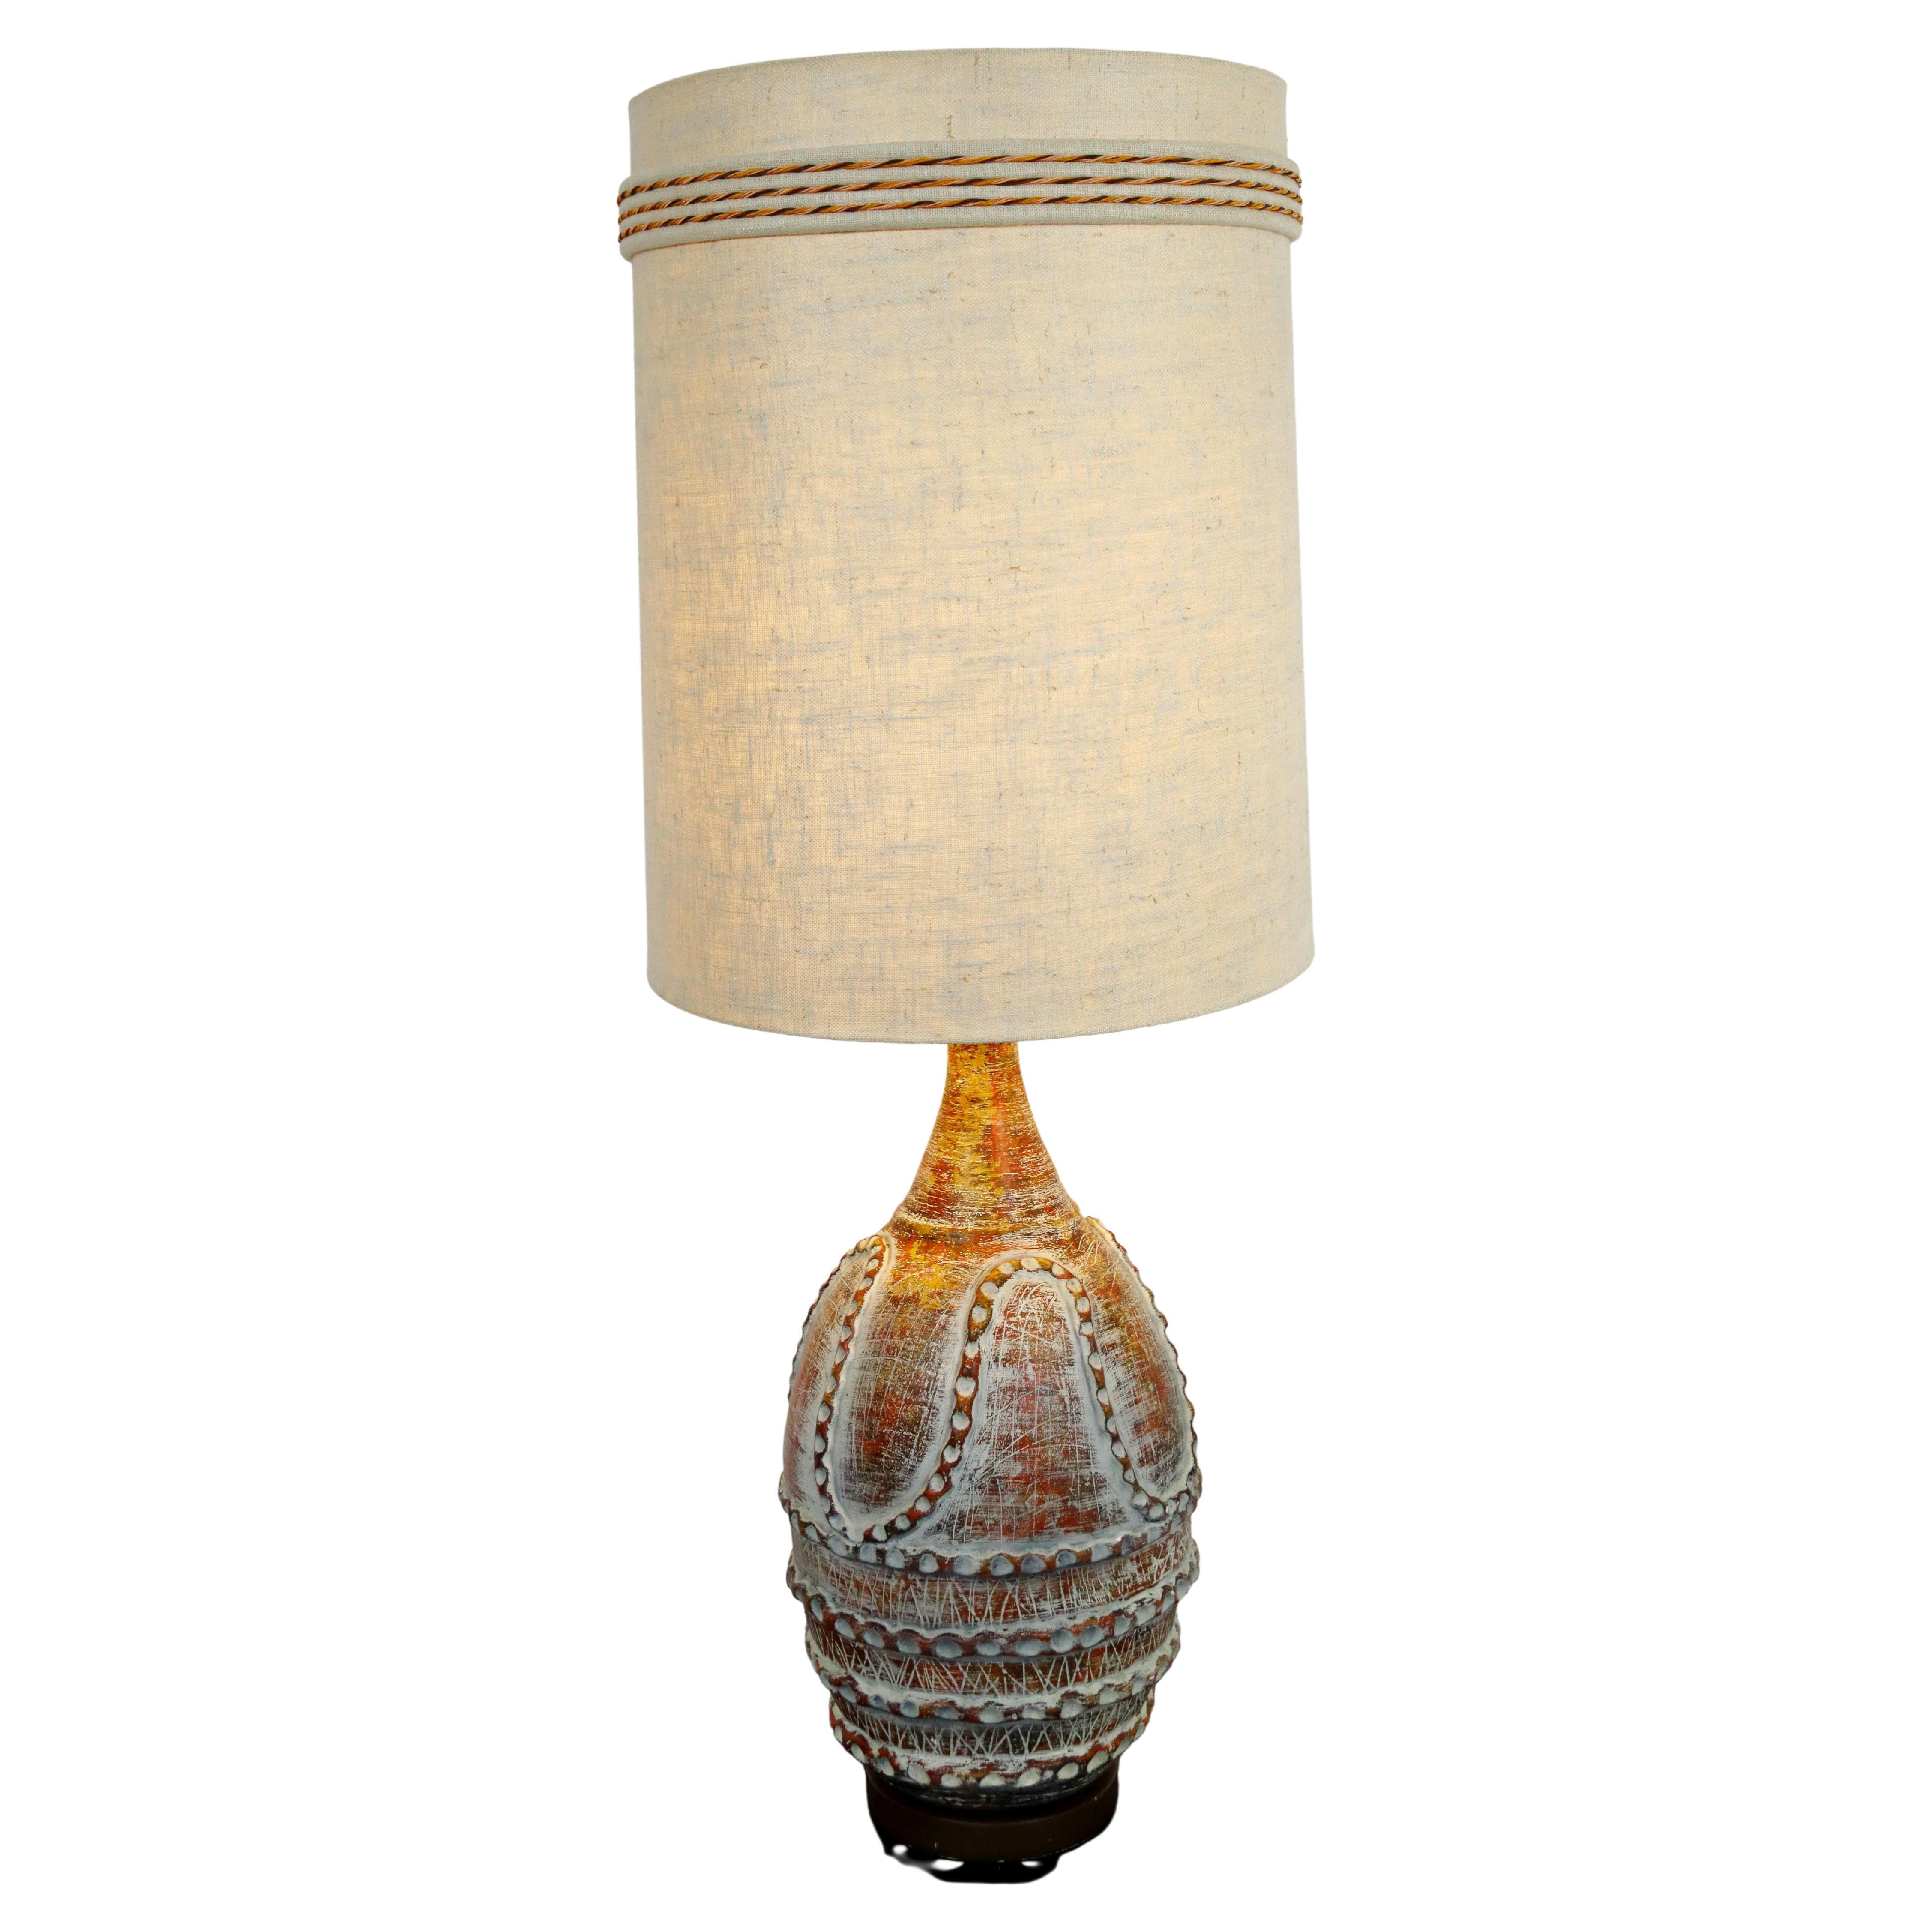 Mid-Century Modern Large Ceramic Table Lamp Original Shade & Finial, 1960s